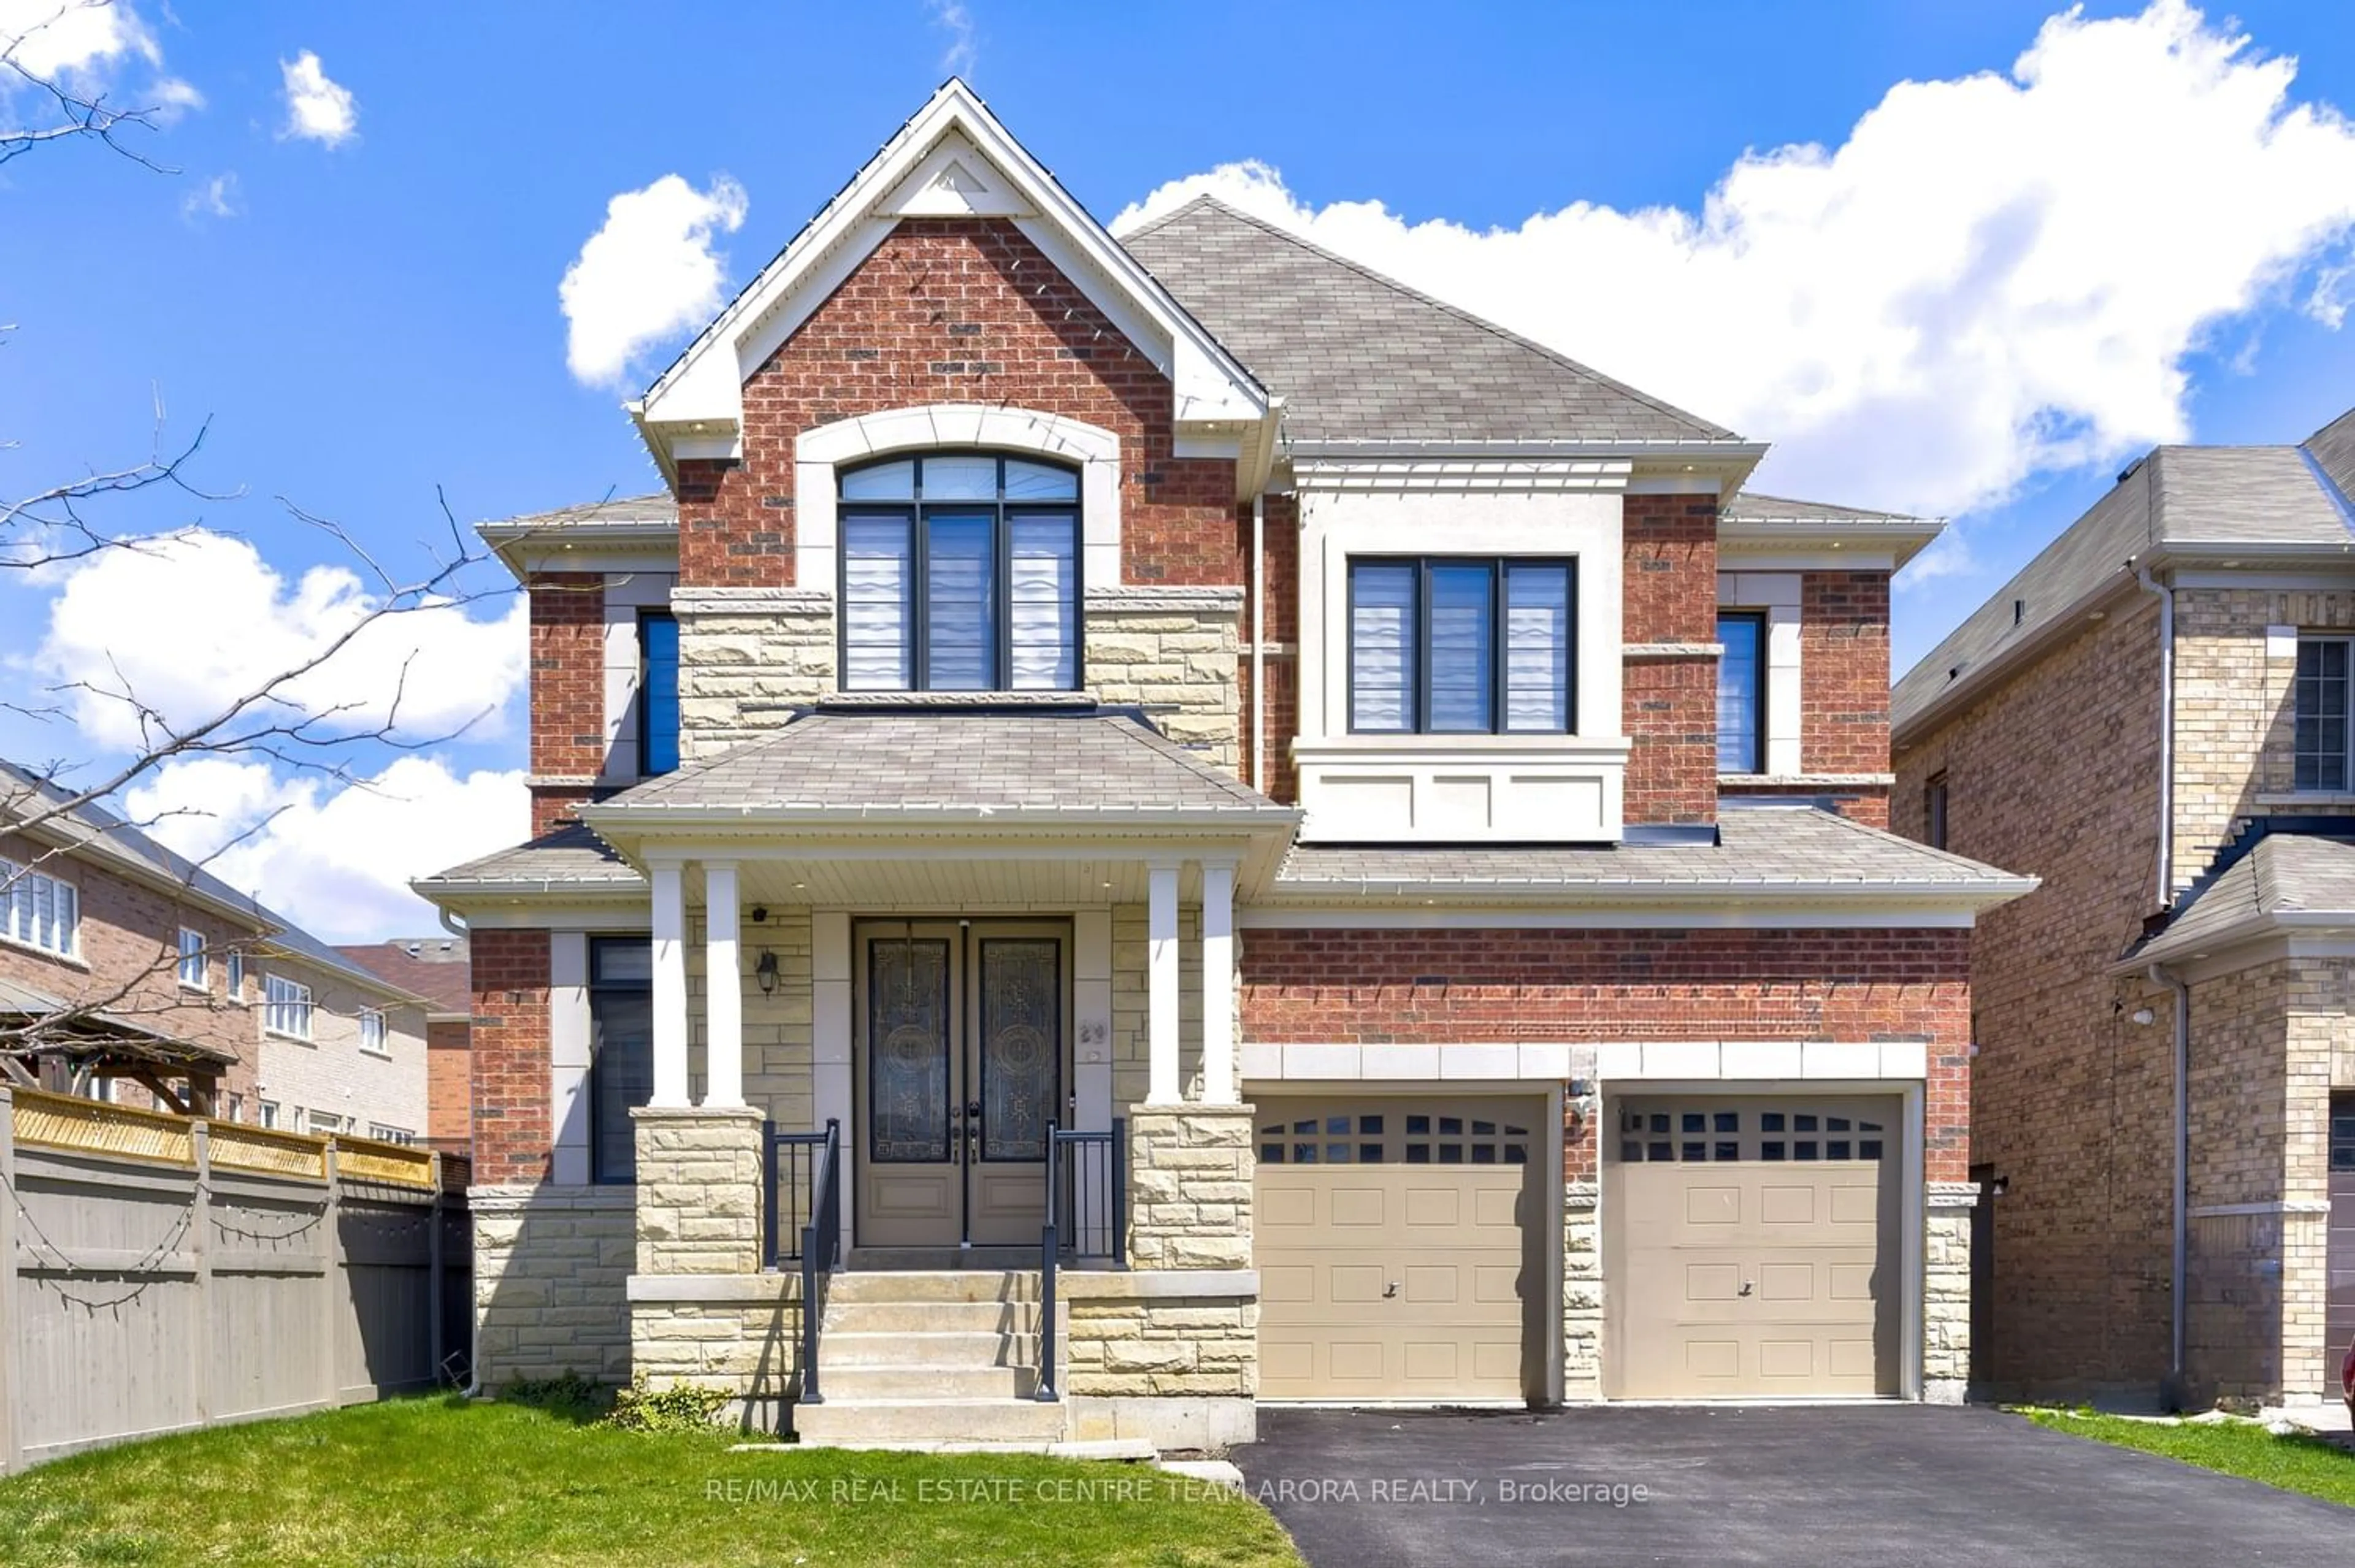 Home with brick exterior material for 29 Dancing Waters Rd, Brampton Ontario L6Y 6B6